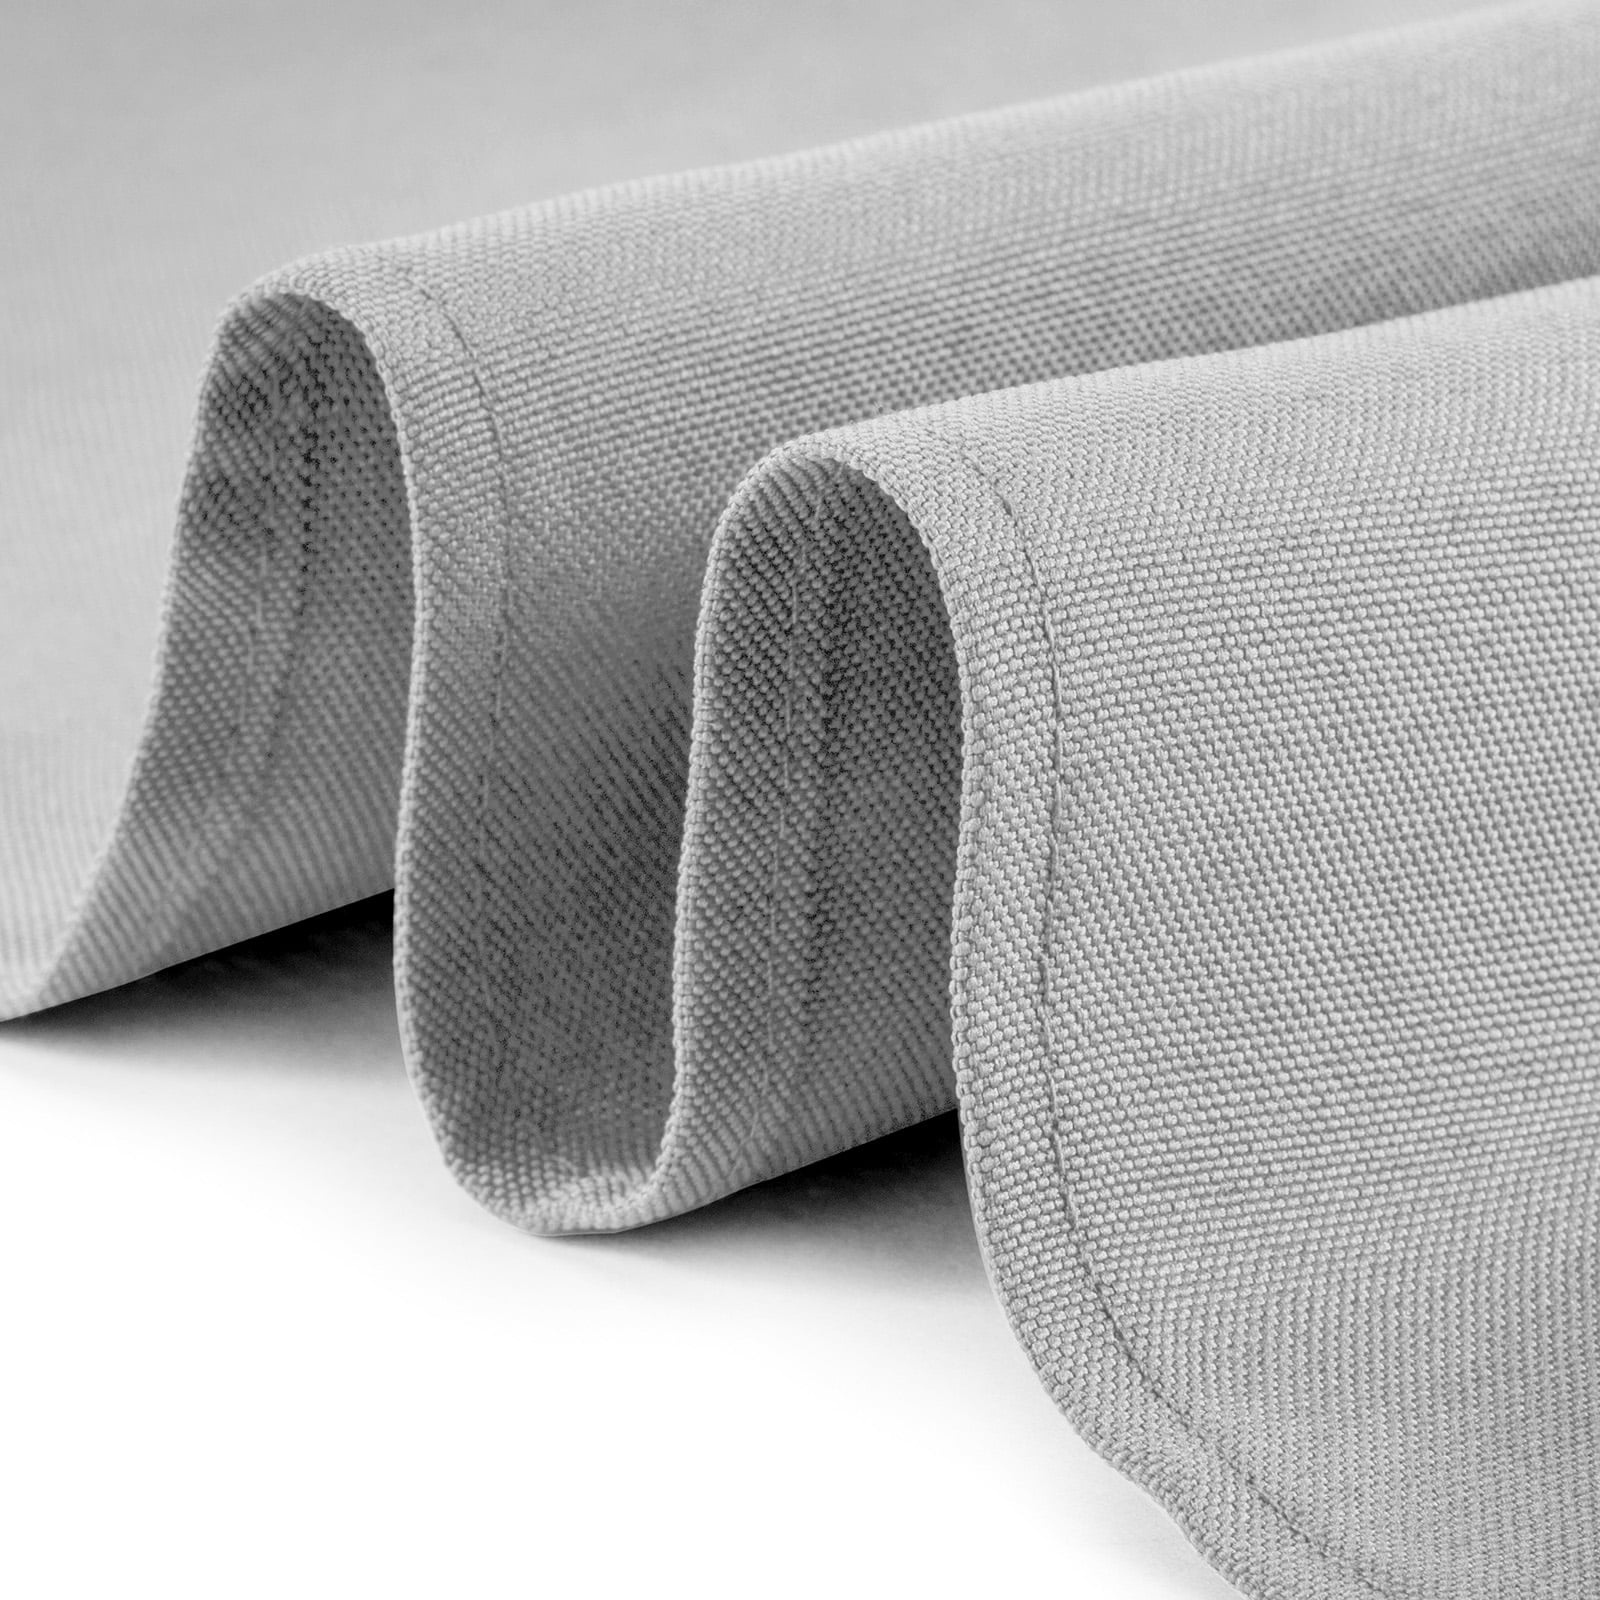 Polyester Plain Fabric Cotton Napkins for Wedding Table Cloth Linen Dinner  1 pc J5Q6